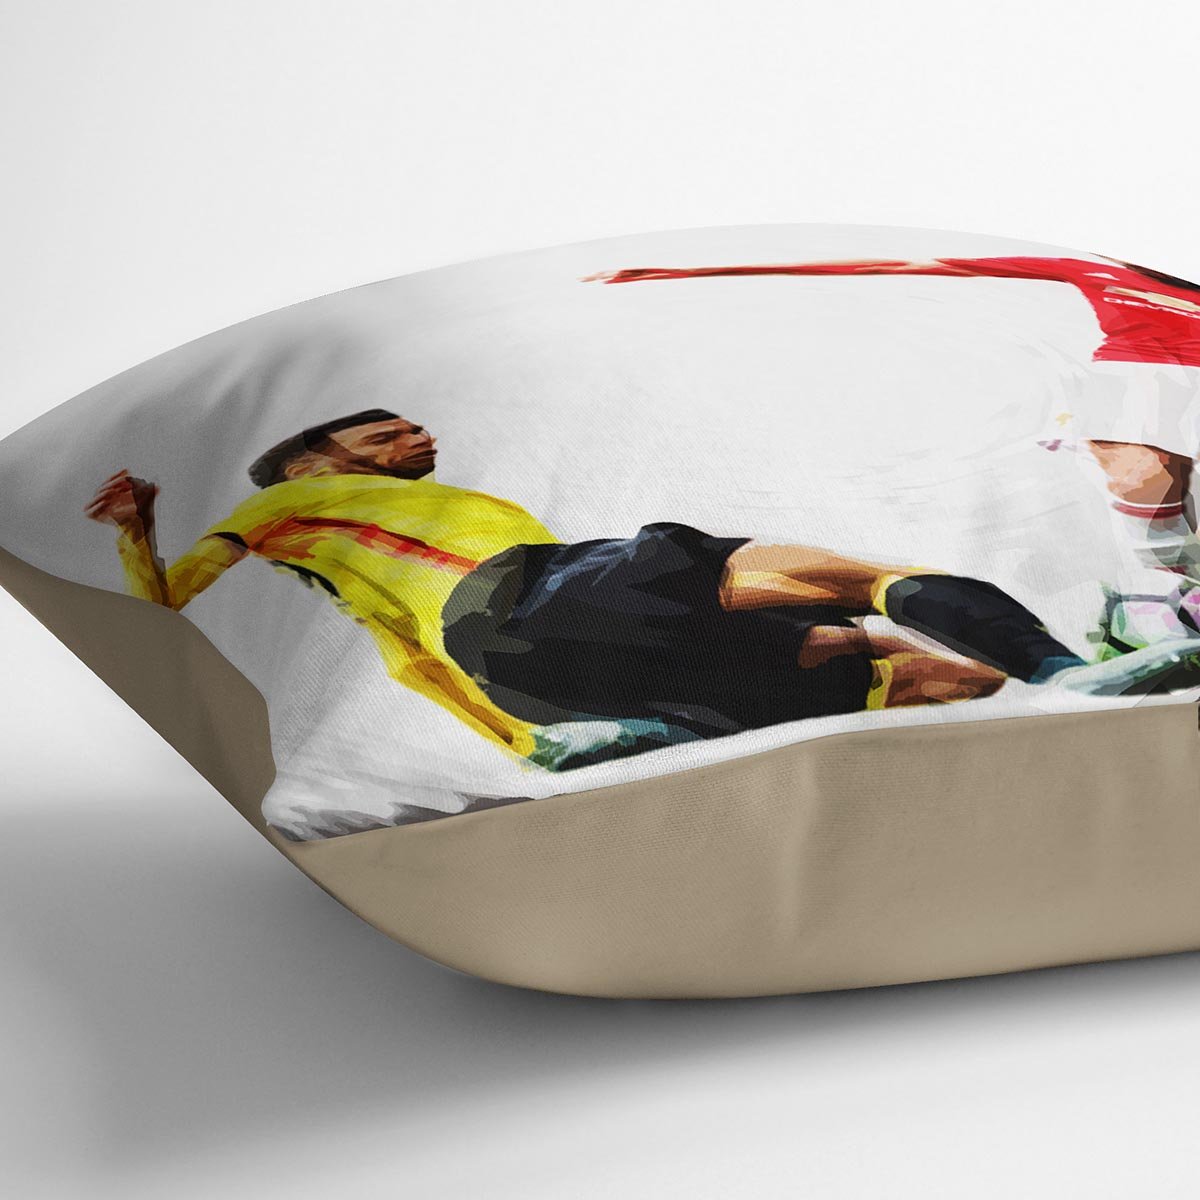 Juan Mata Man United Cushion